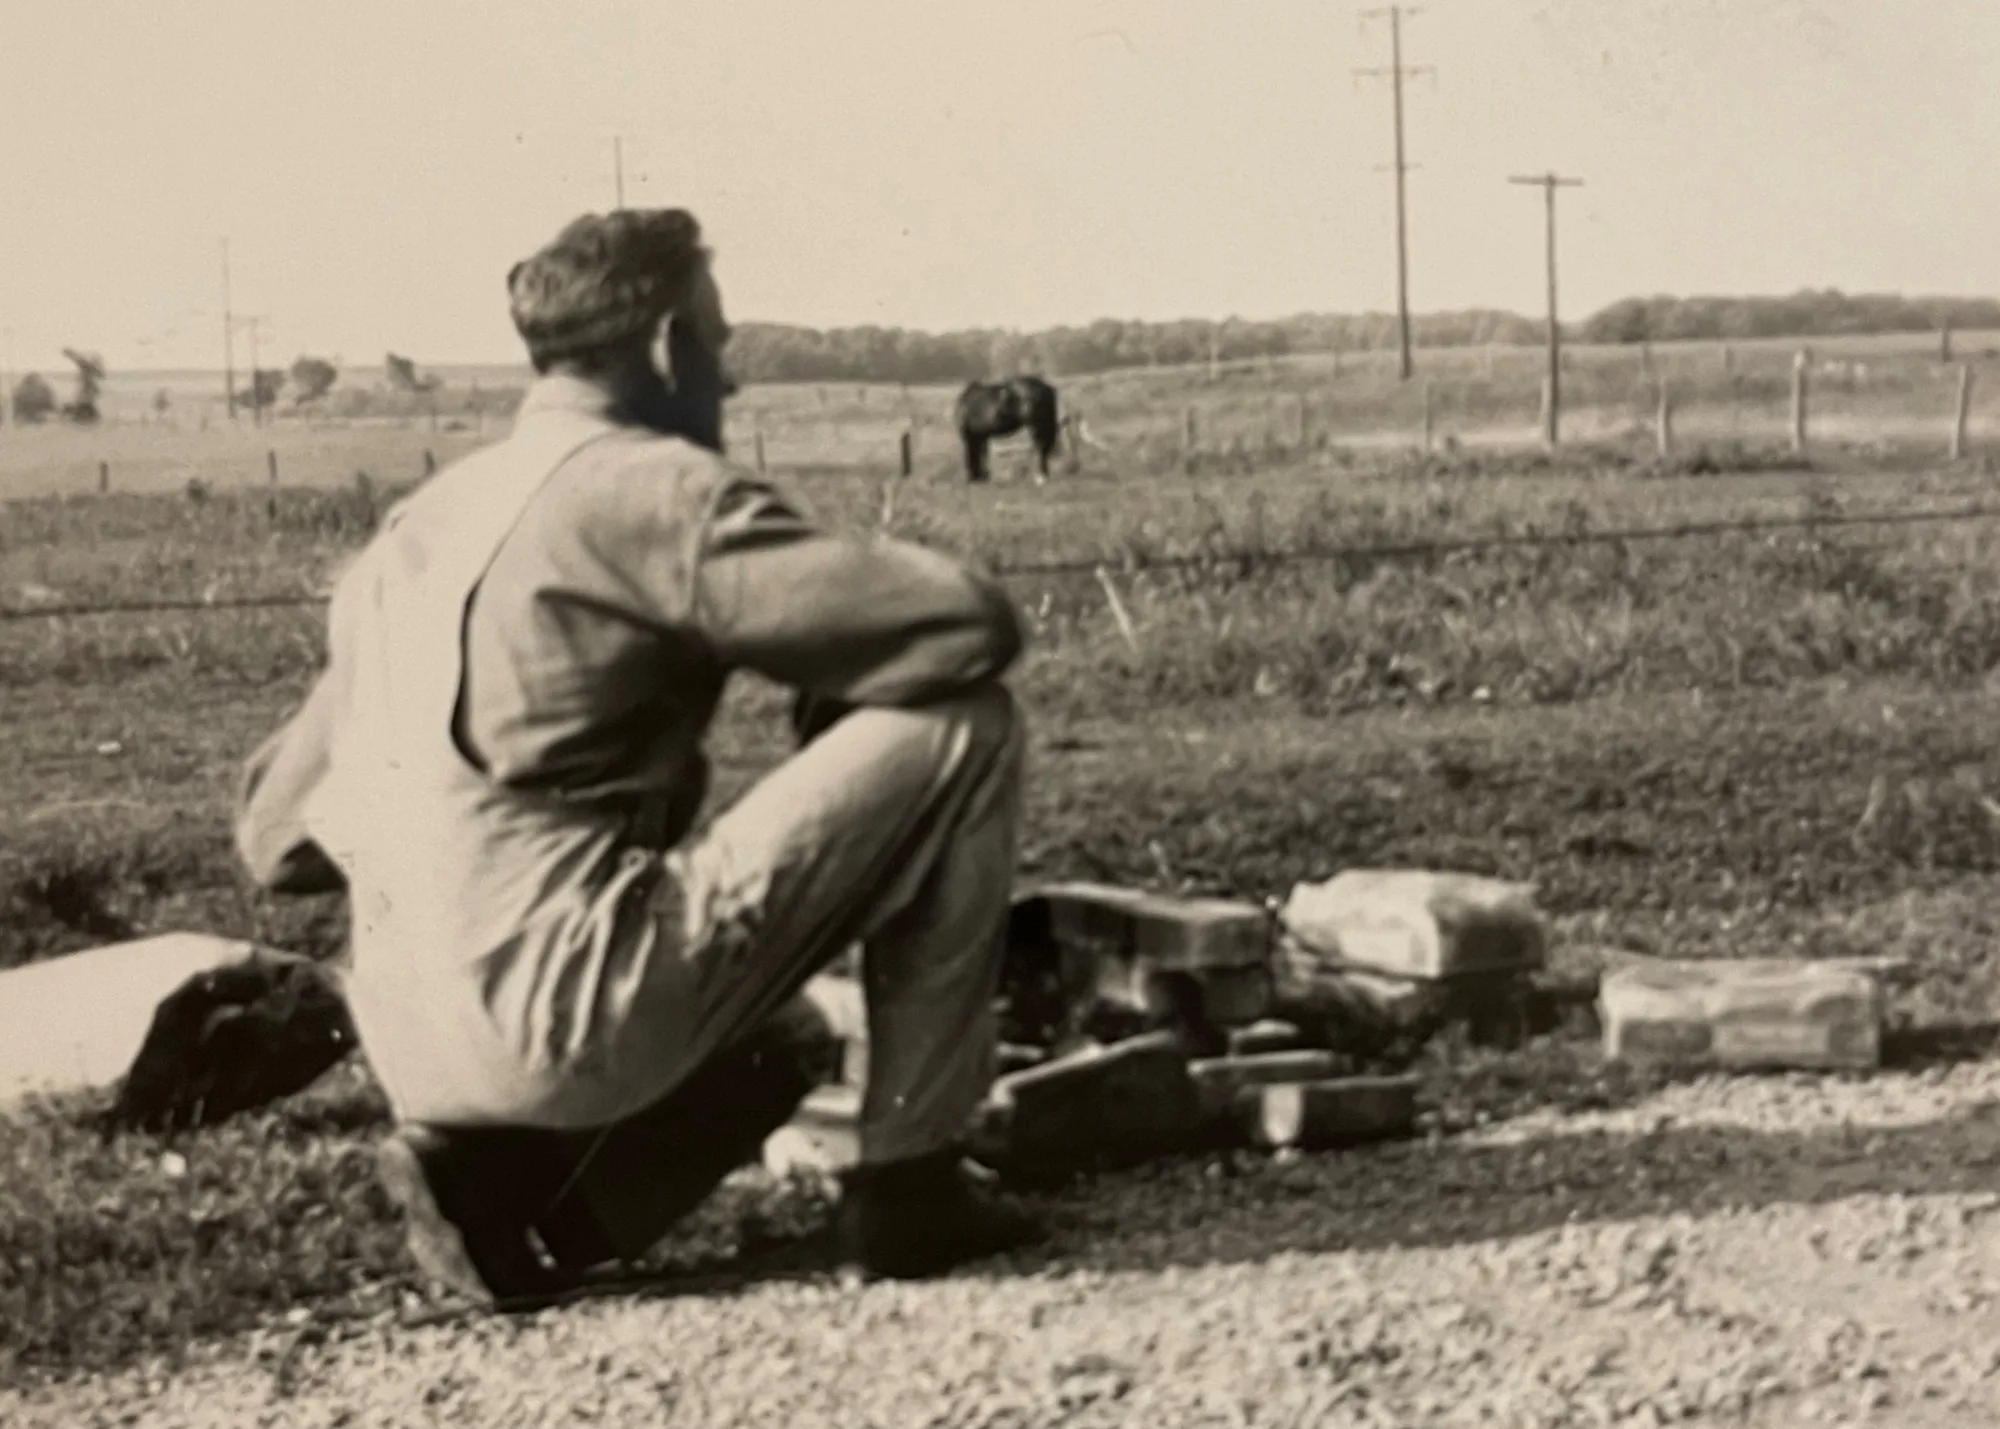 Principals' grandfather on his farm evaluating the soil